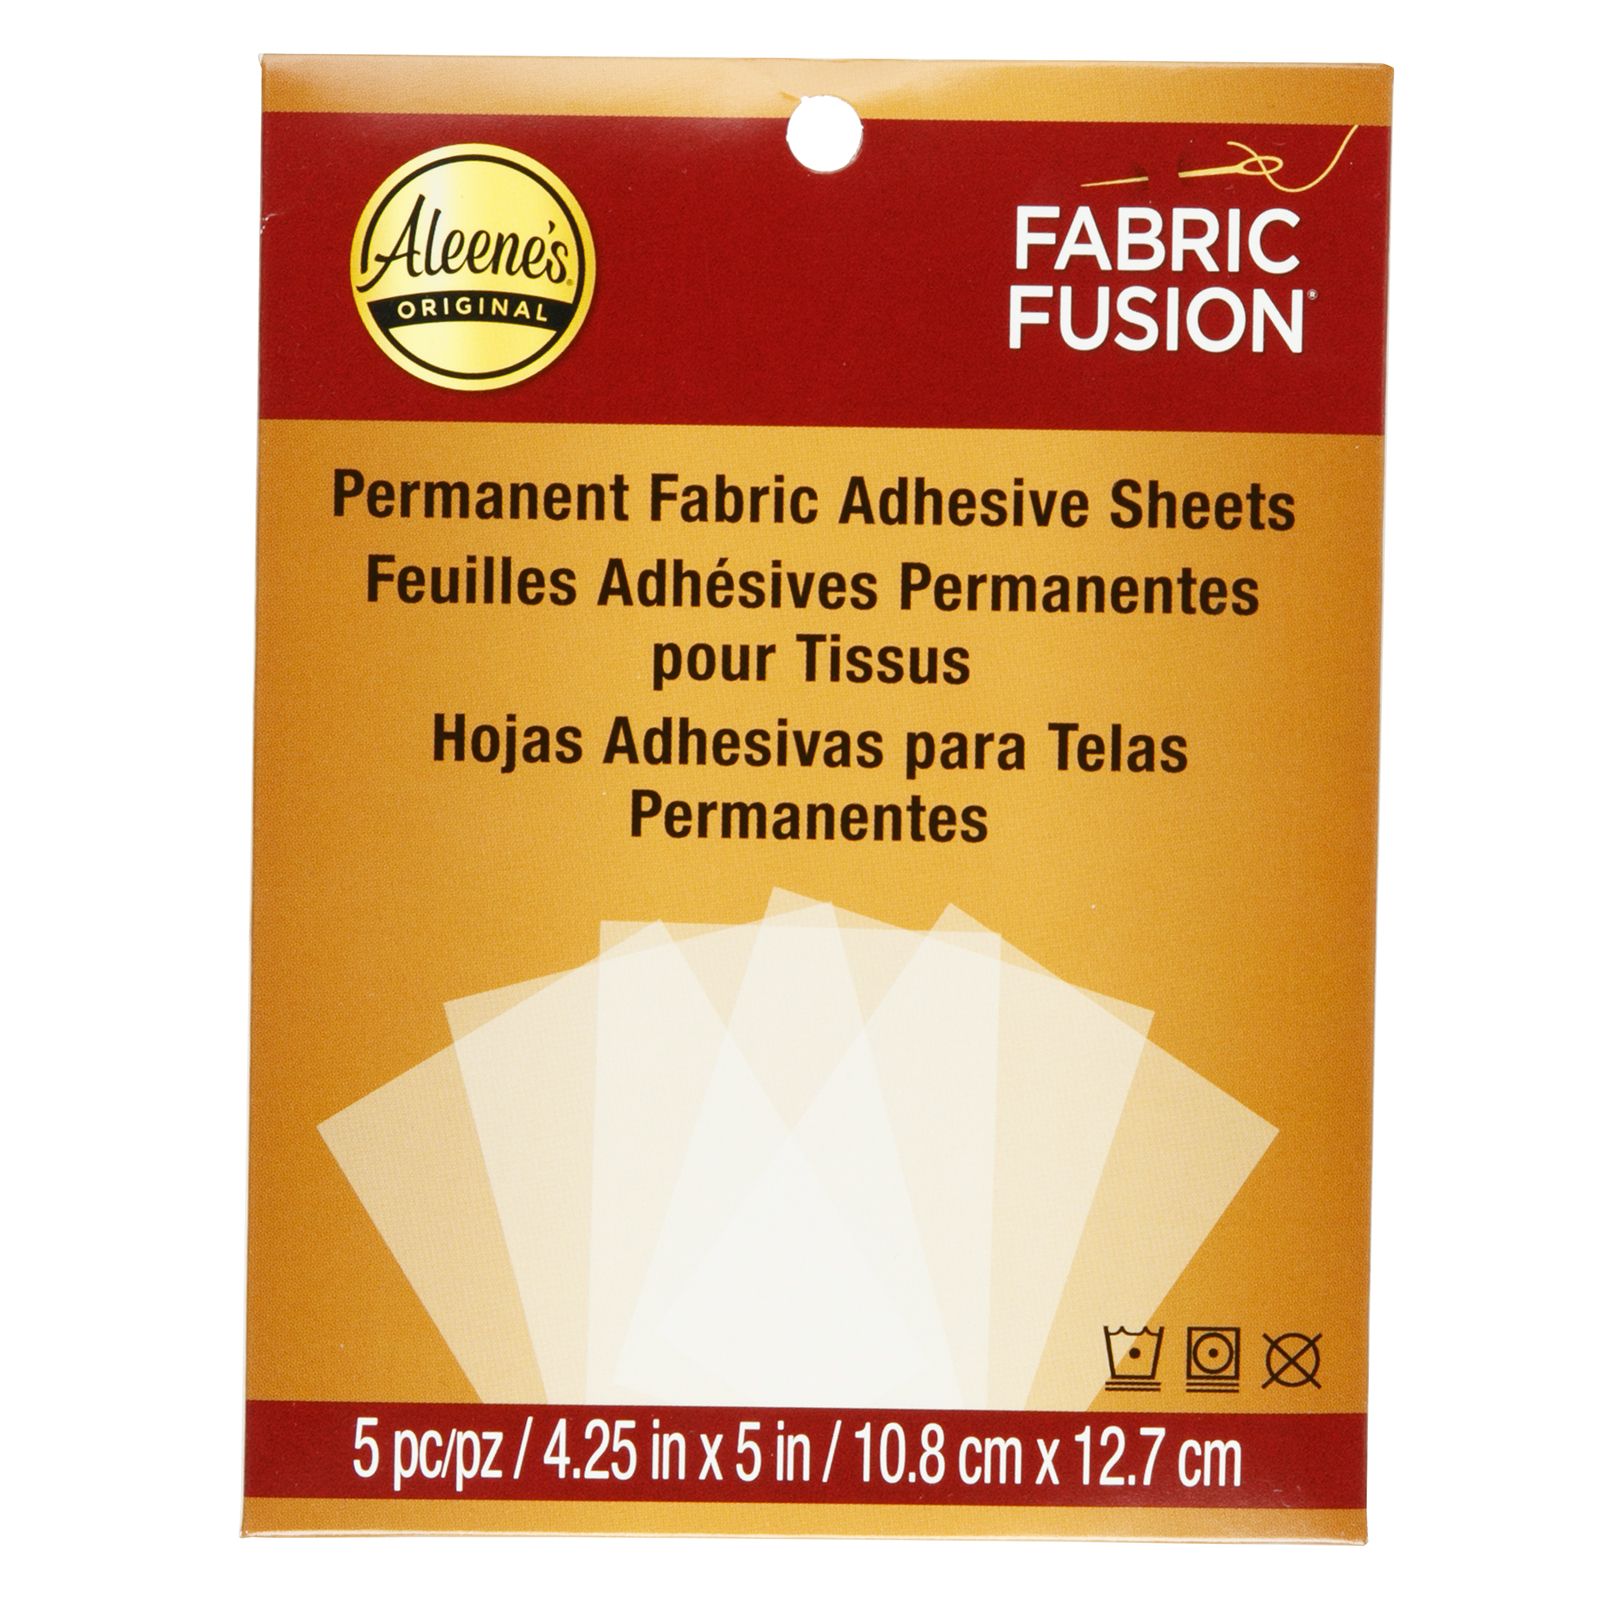 Aleene's • Fabric fusion glue peel & stick sheets 5pcs